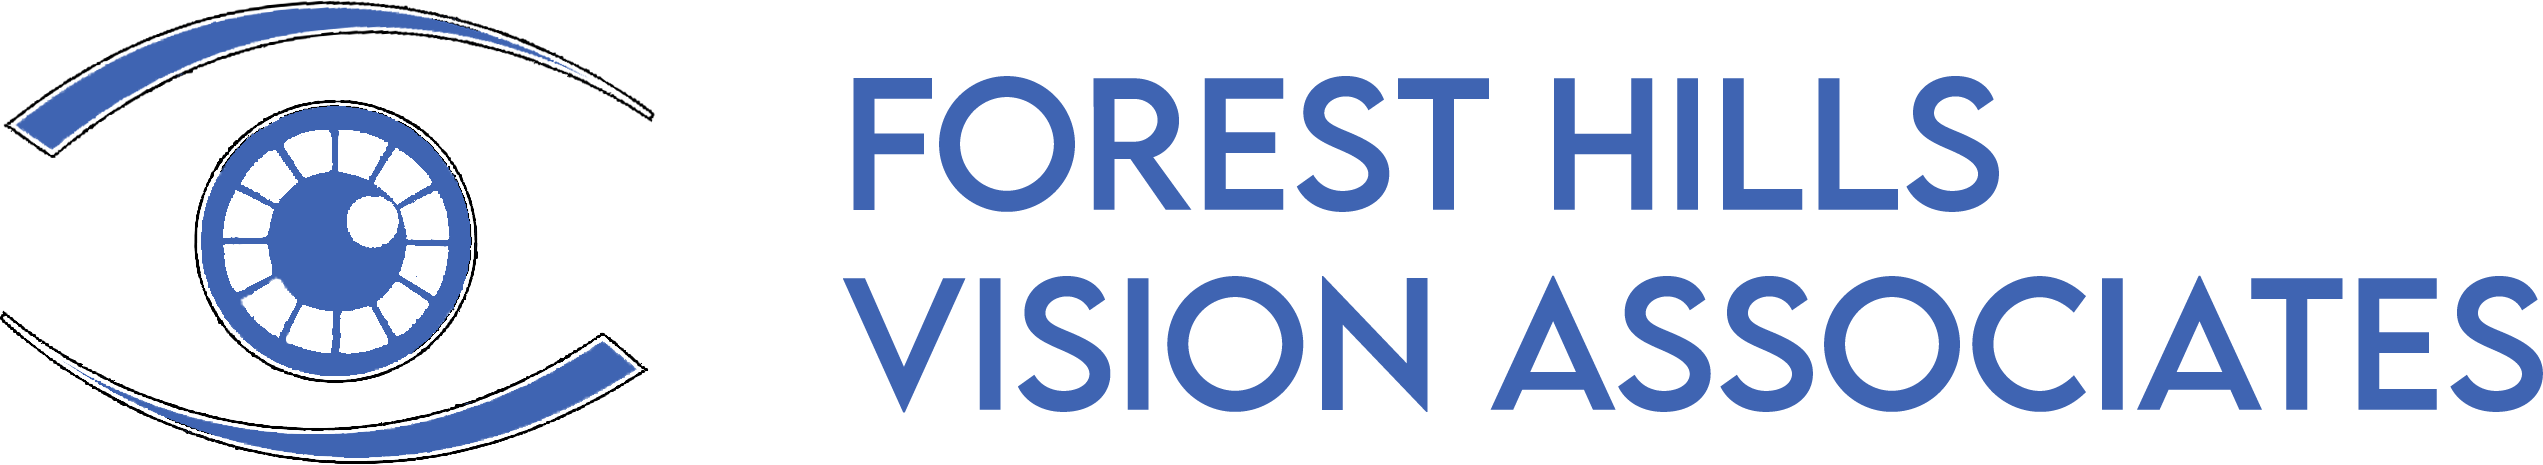 Forest Hills Vision Associates